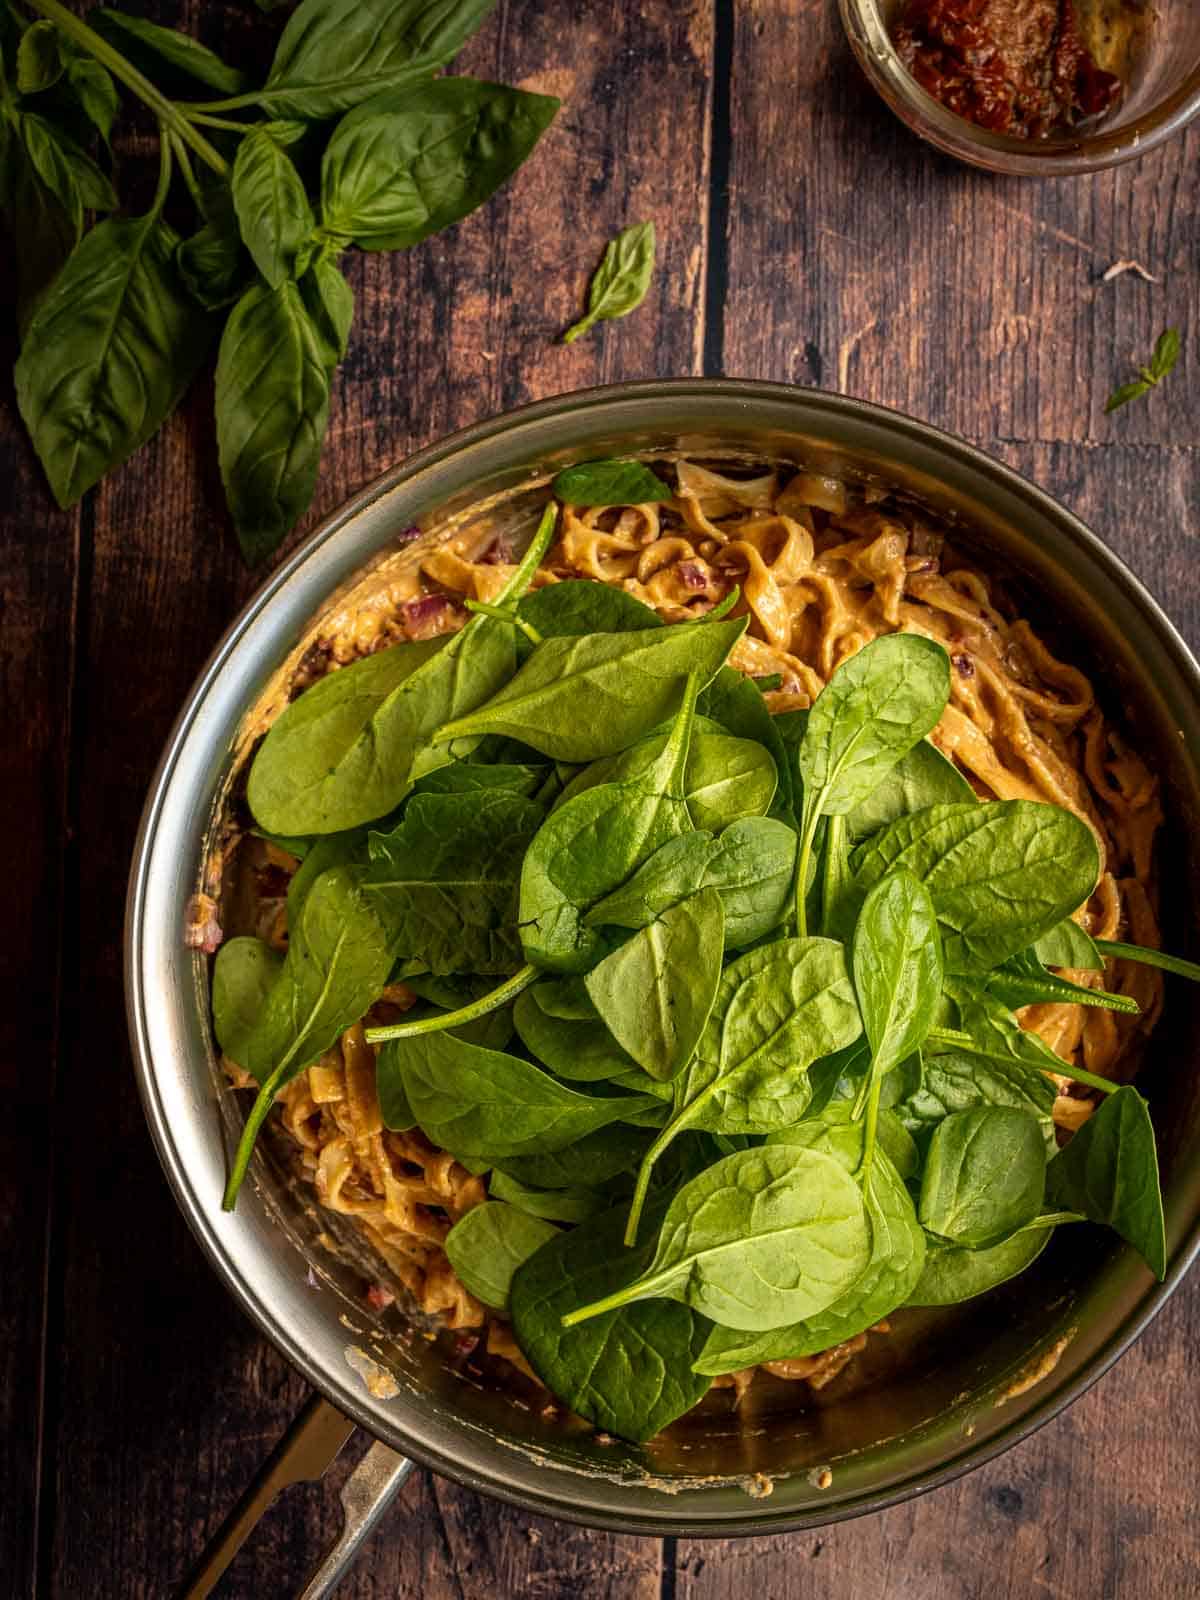  add fresh spinach into the Spinach fettuccine pasta.